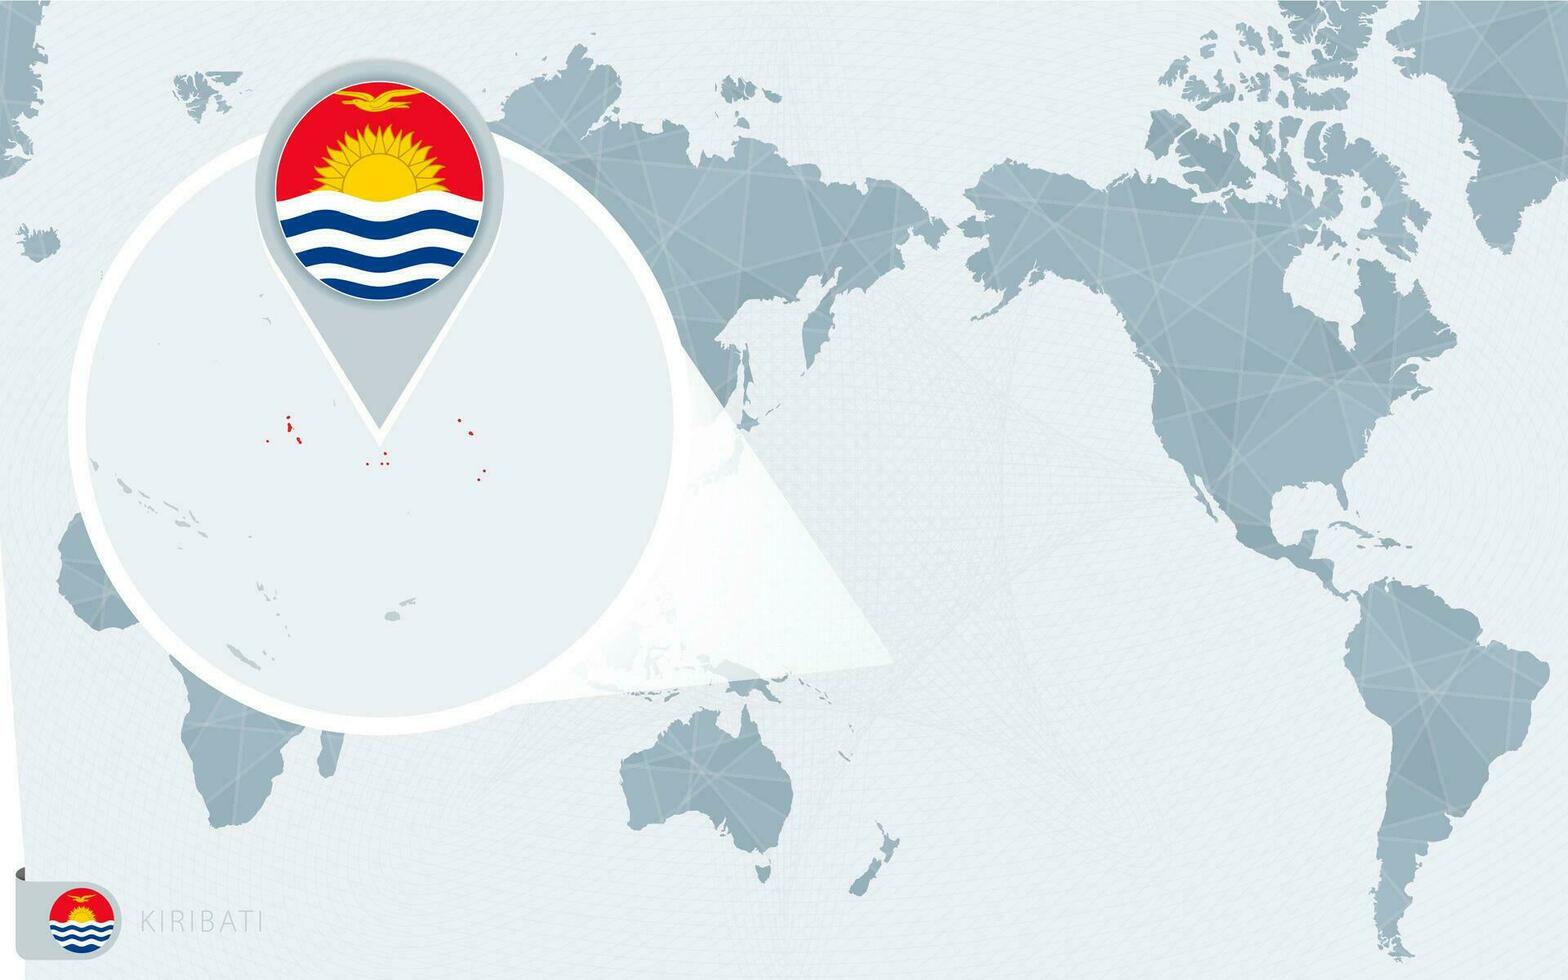 grote Oceaan gecentreerd wereld kaart met uitvergroot kiribati. vlag en kaart van kiribati. vector